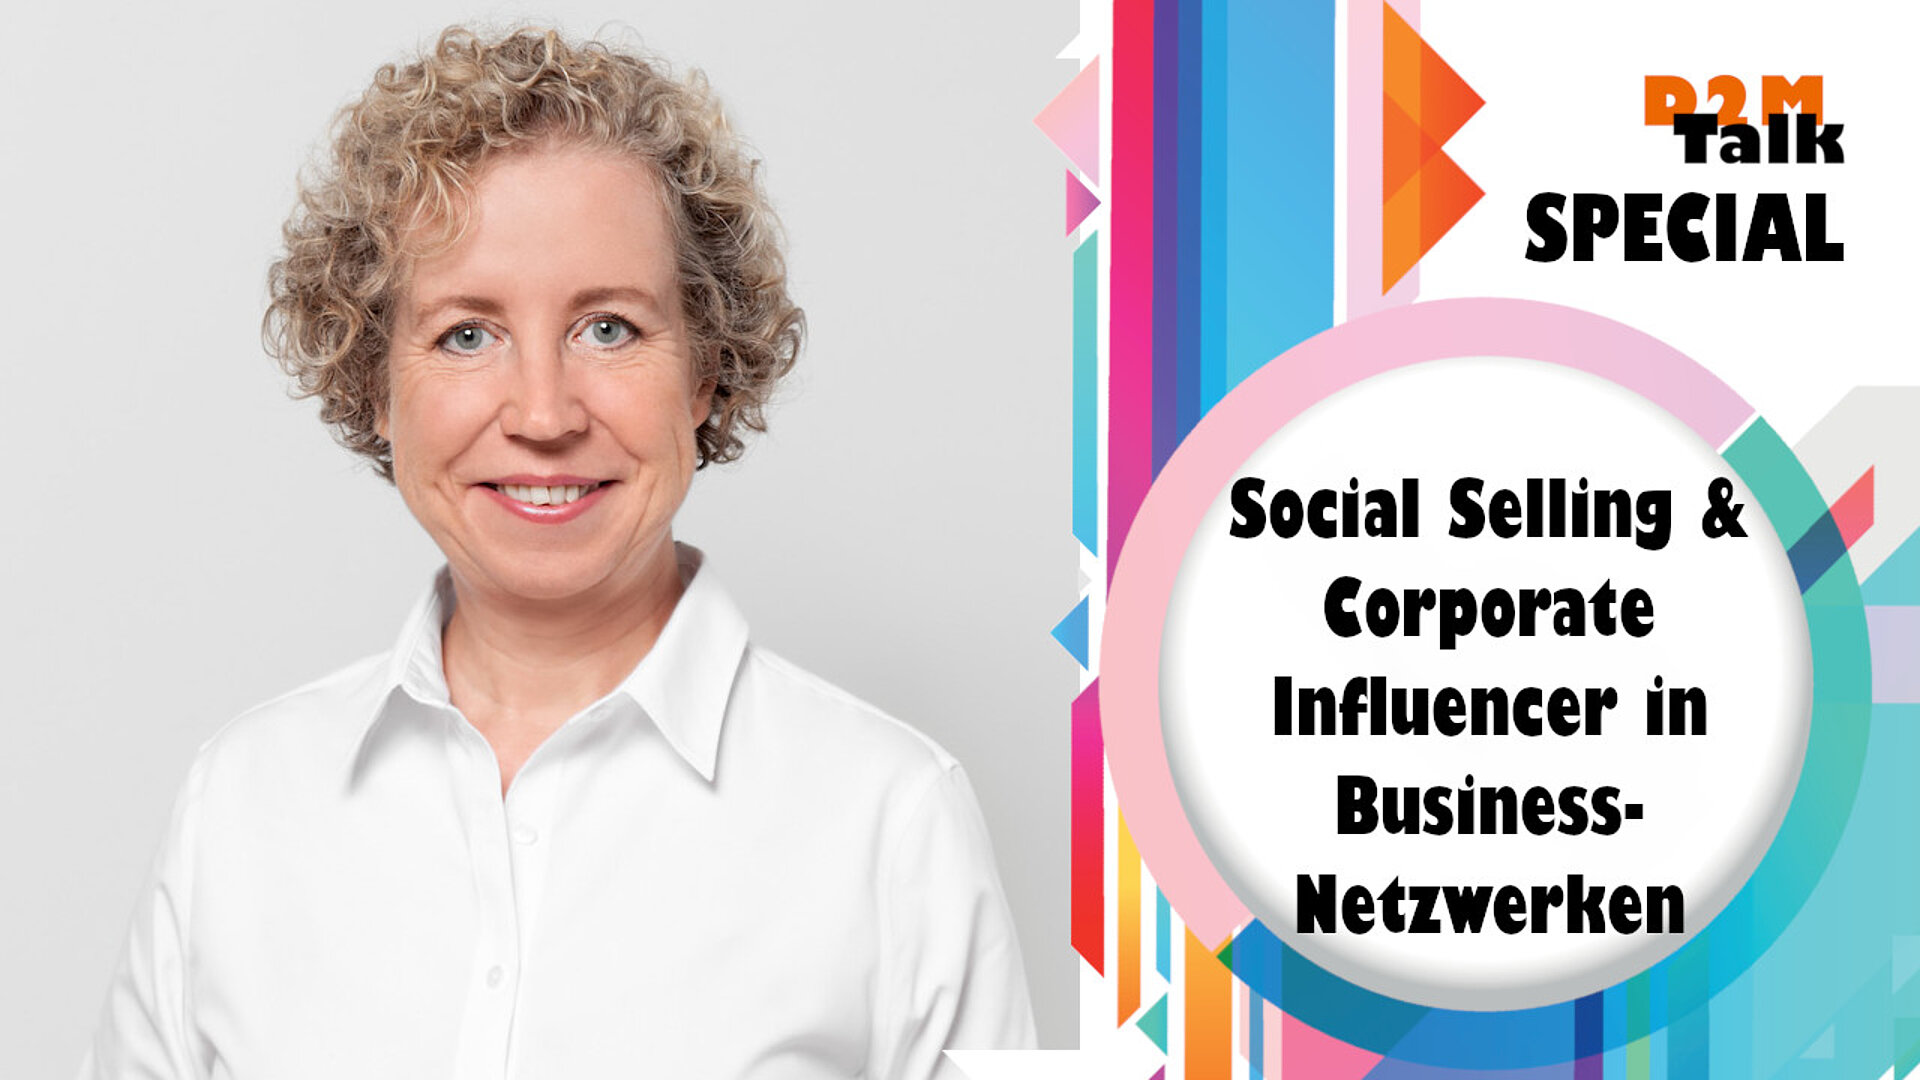 Kamingespräch zu "Social Selling & Corporate Influencer" in Business-Netzwerken